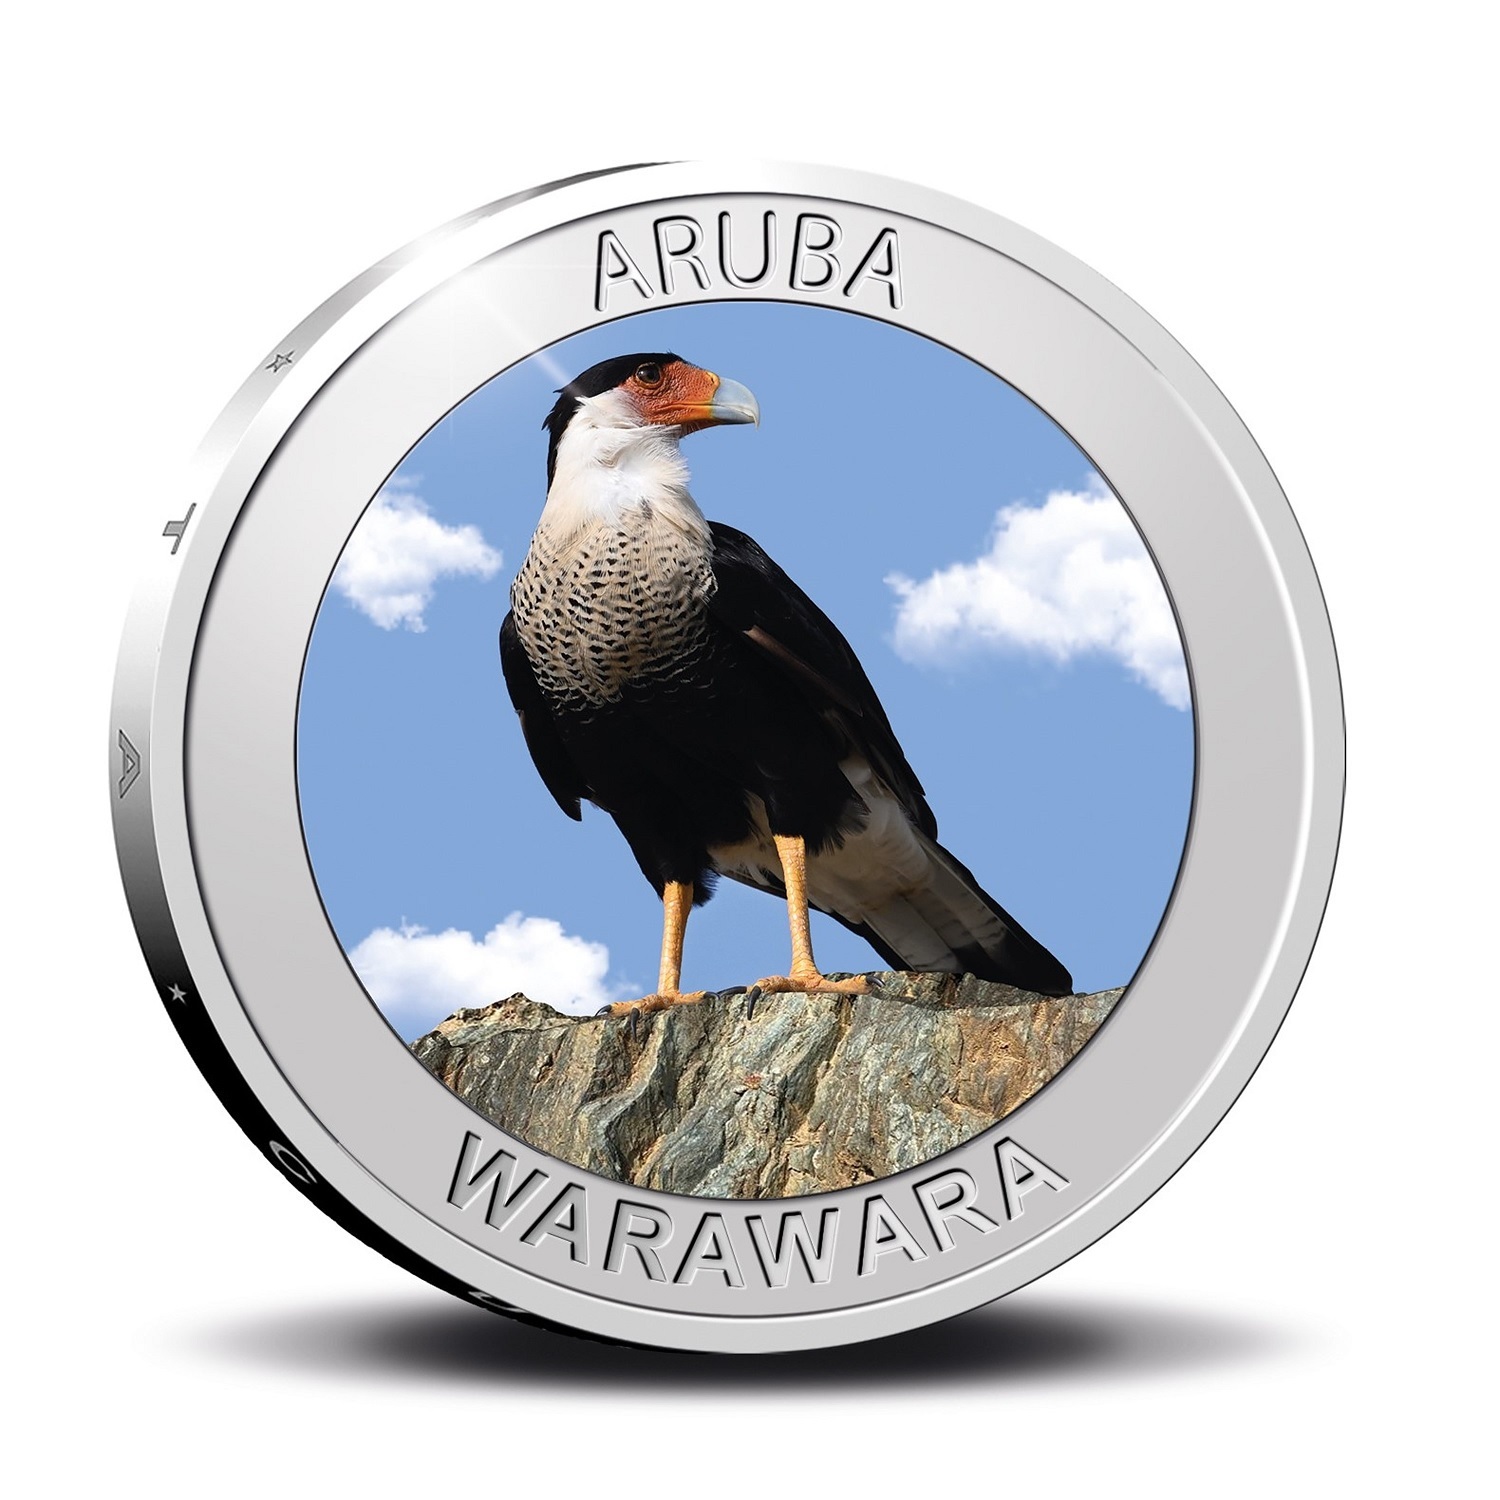 (W016.5.F.2022.0114523) Aruba 5 Florin Warawara 2022 - Proof silver Reverse (zoom)